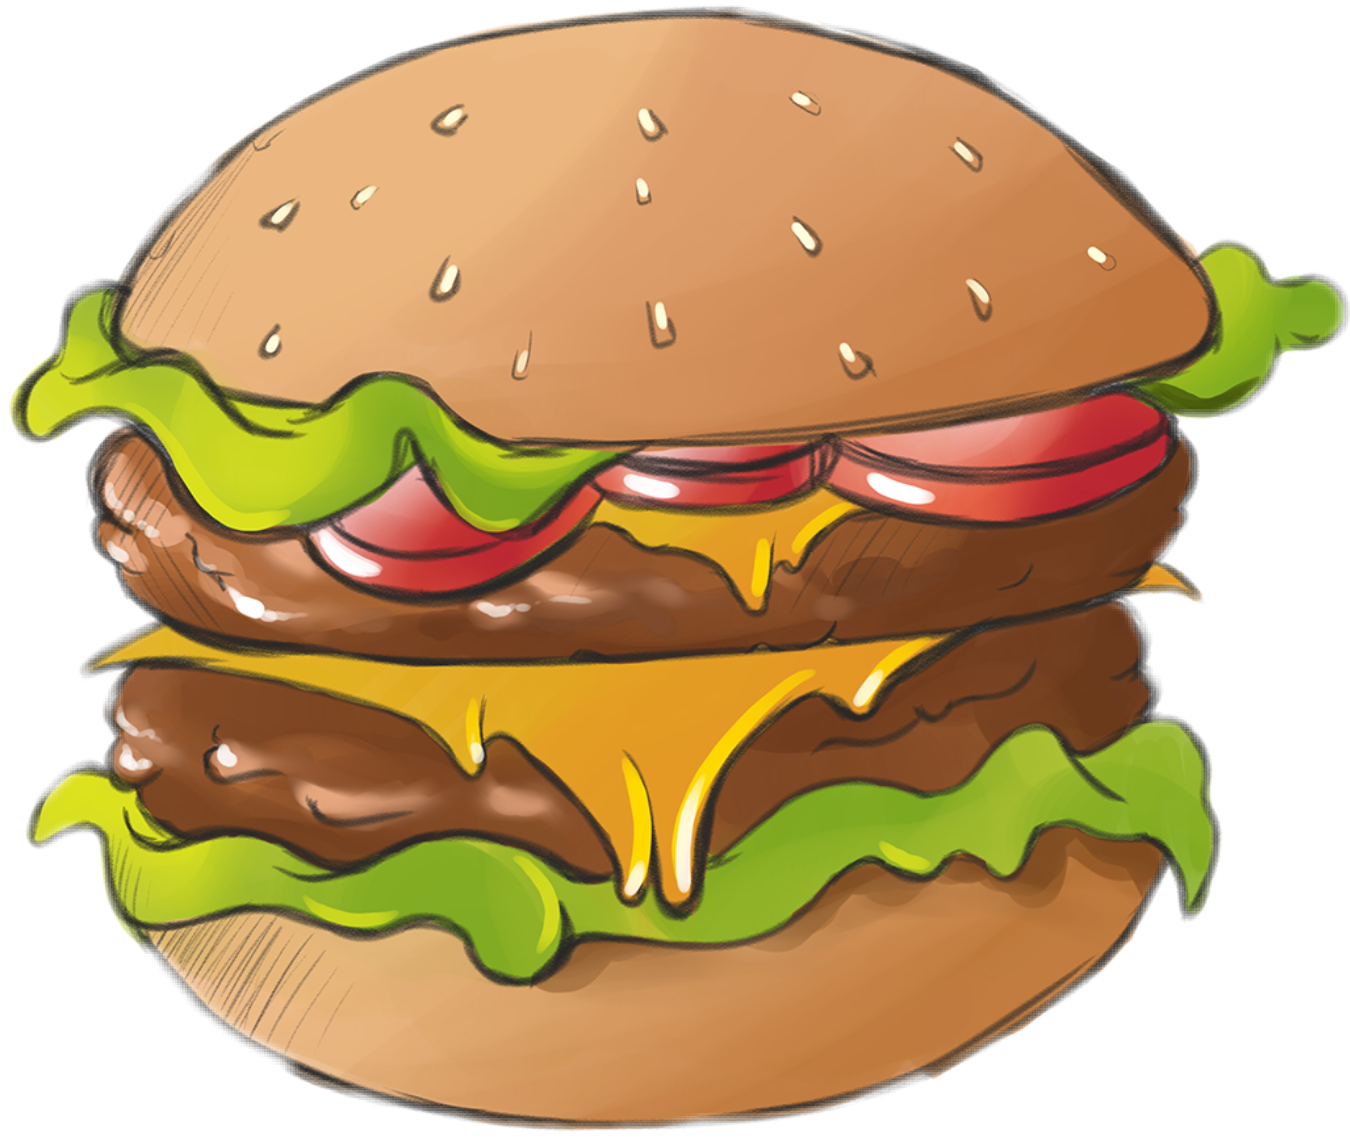 Picnic cheeseburger sticker by. Grill clipart sandwich press